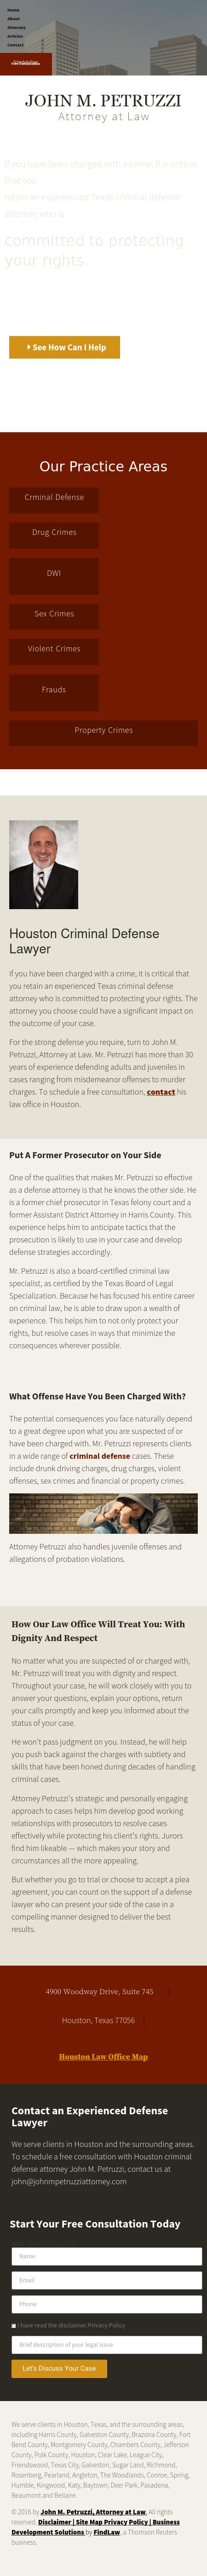 Law Office Of John M Petruzzi - Houston TX Lawyers